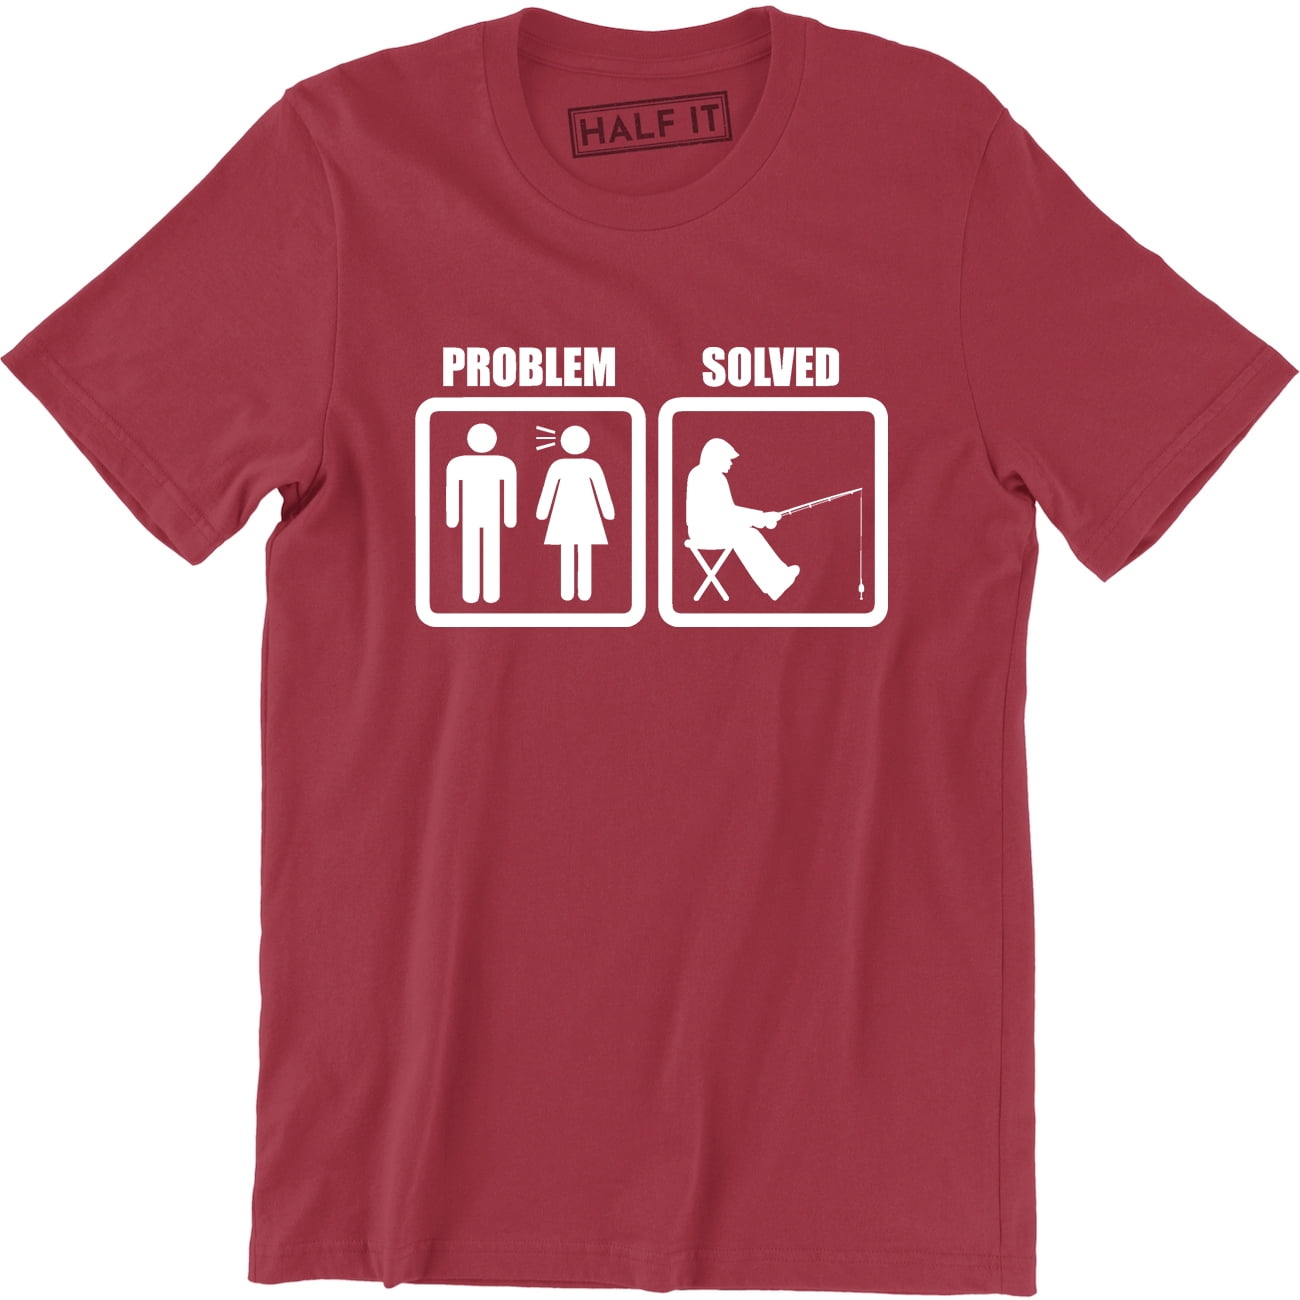 Fisherman T-Shirts for Men